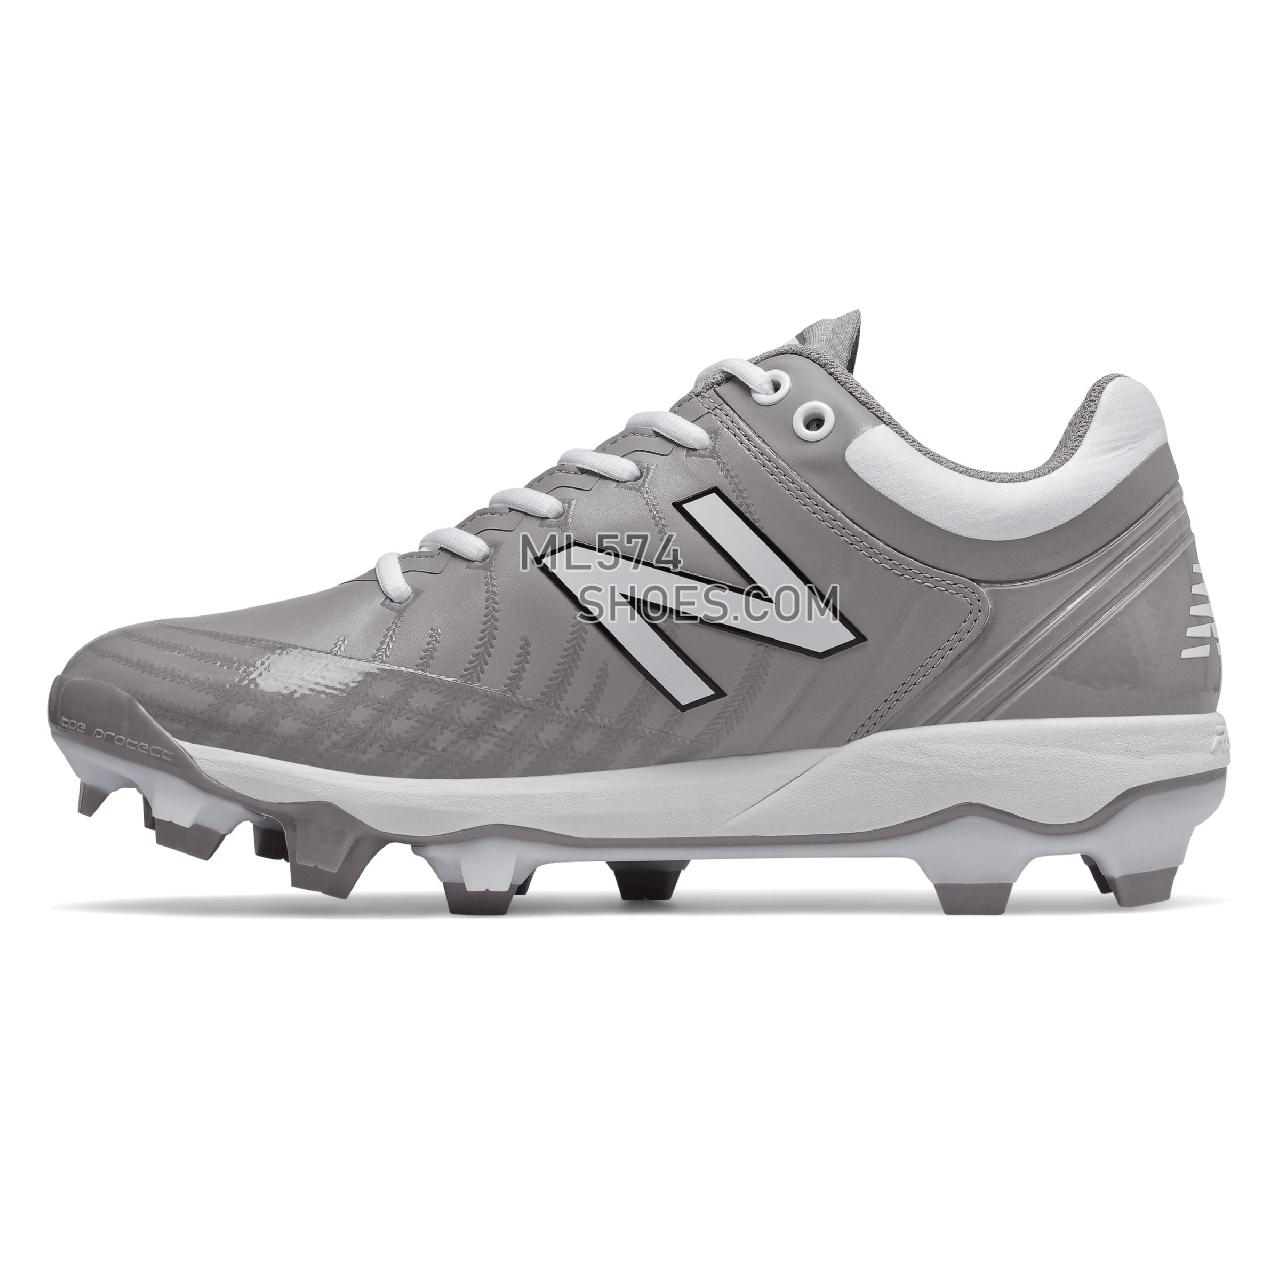 New Balance 4040v5 TPU - Men's Baseball Turf - Grey with White - PL4040G5